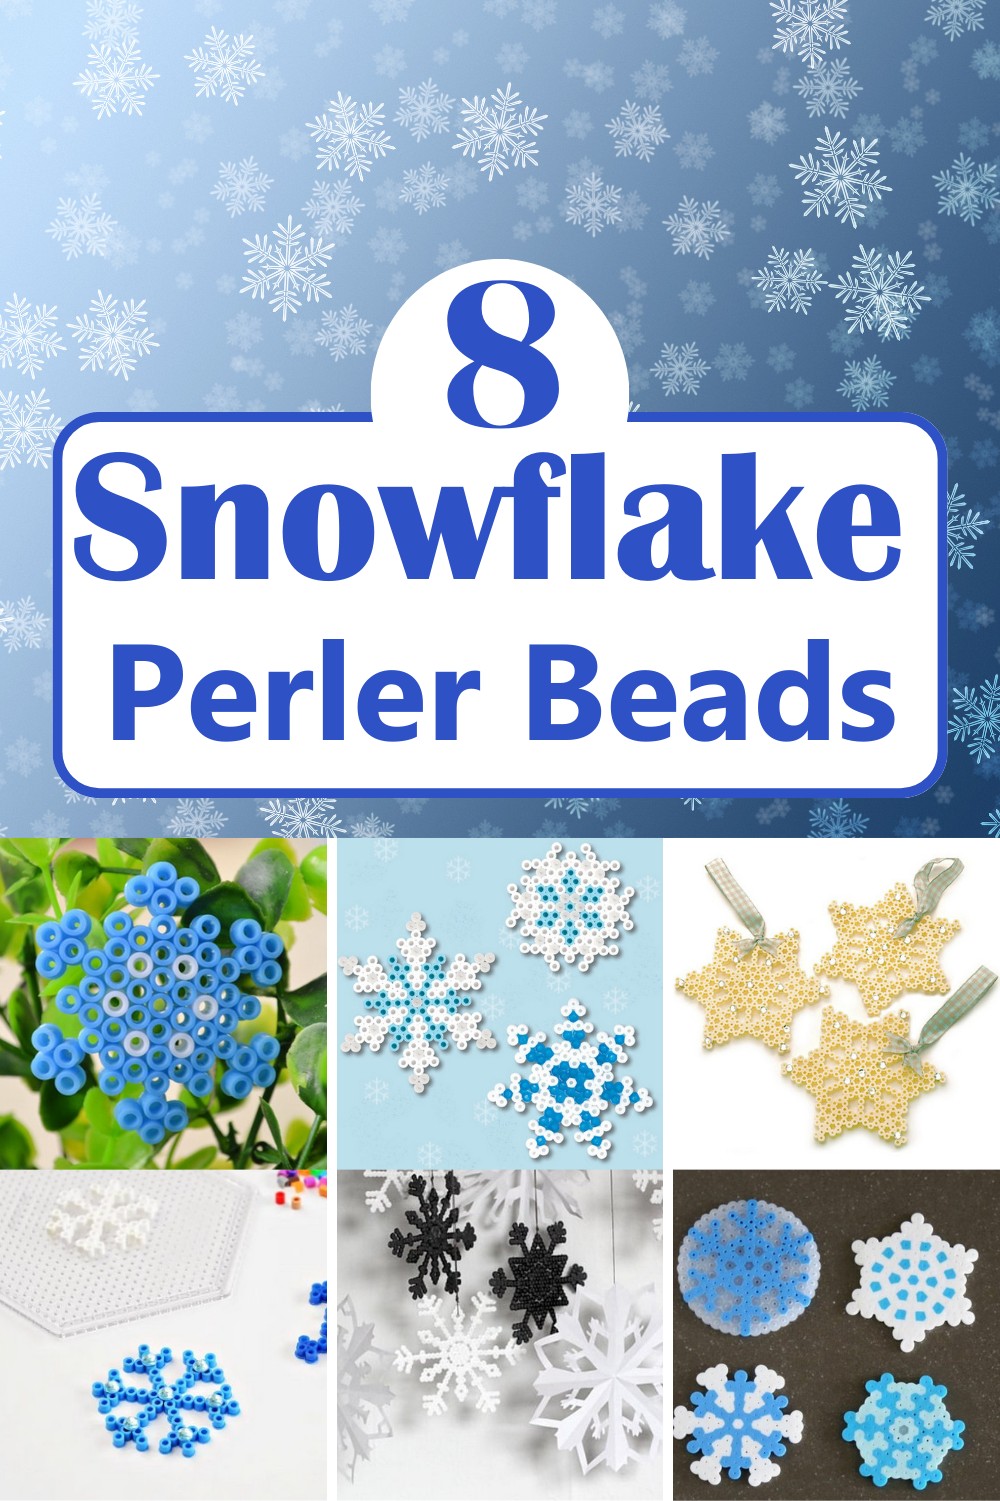 Perler Beads Perler Bead Bag, Black, White and Blue. Receive a